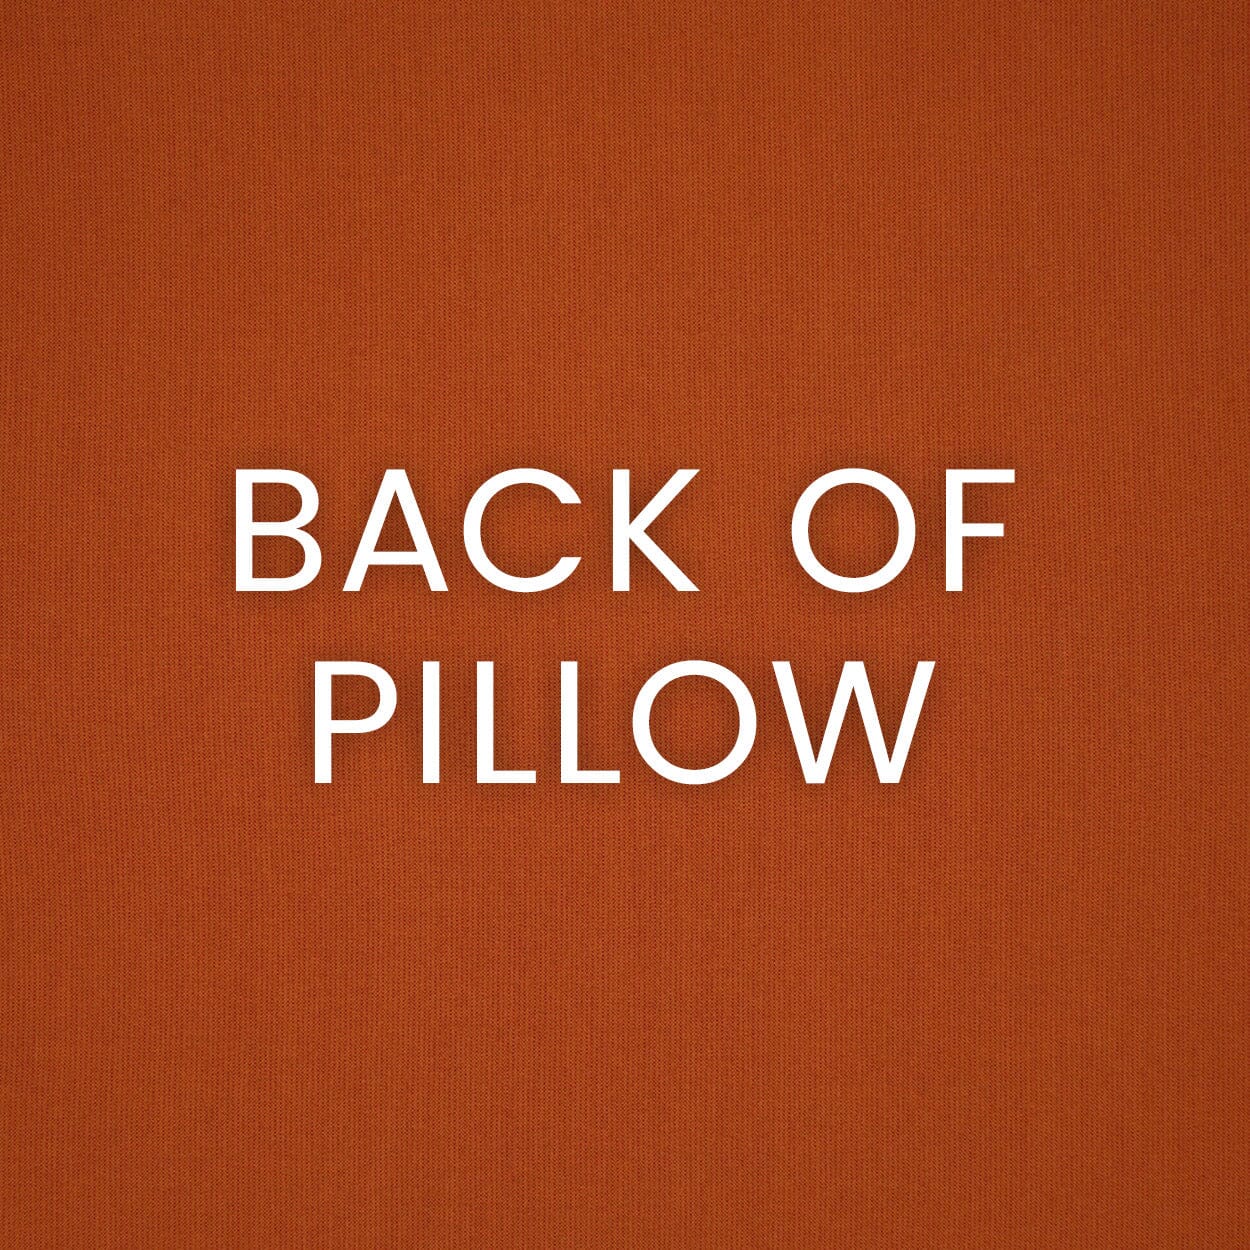 D.V. Kap 22" x 22" Outdoor Throw Pillow | Midori Nectarine Pillows D.V Kap Outdoor